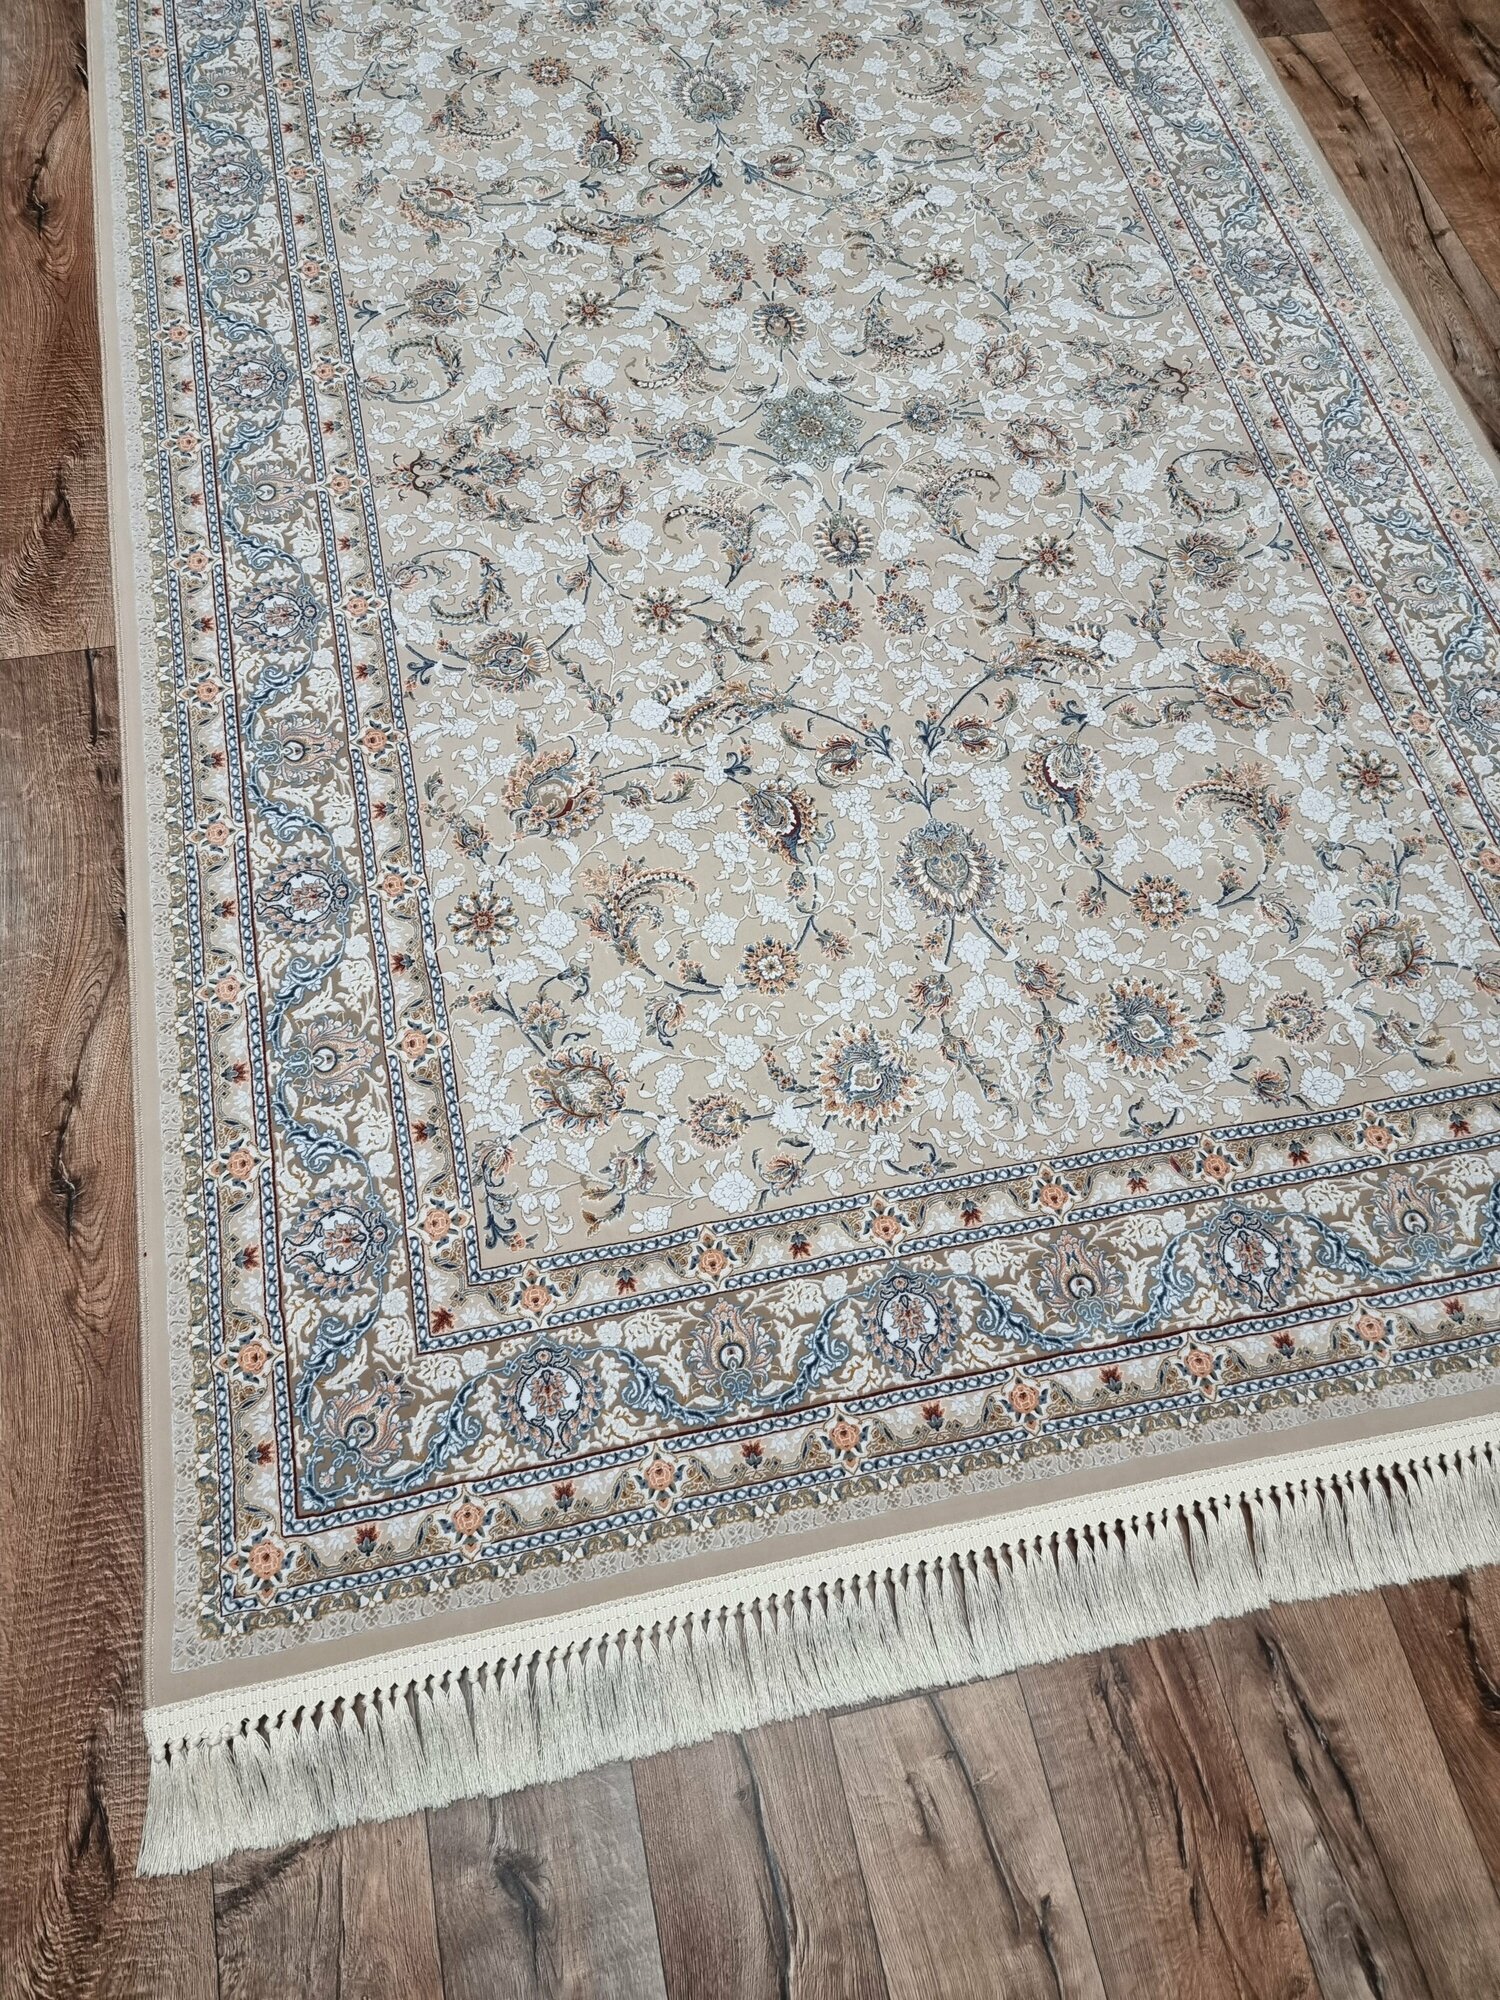 Персидский ковер Farrahi Carpet, Иран, размер 1х1.5 м